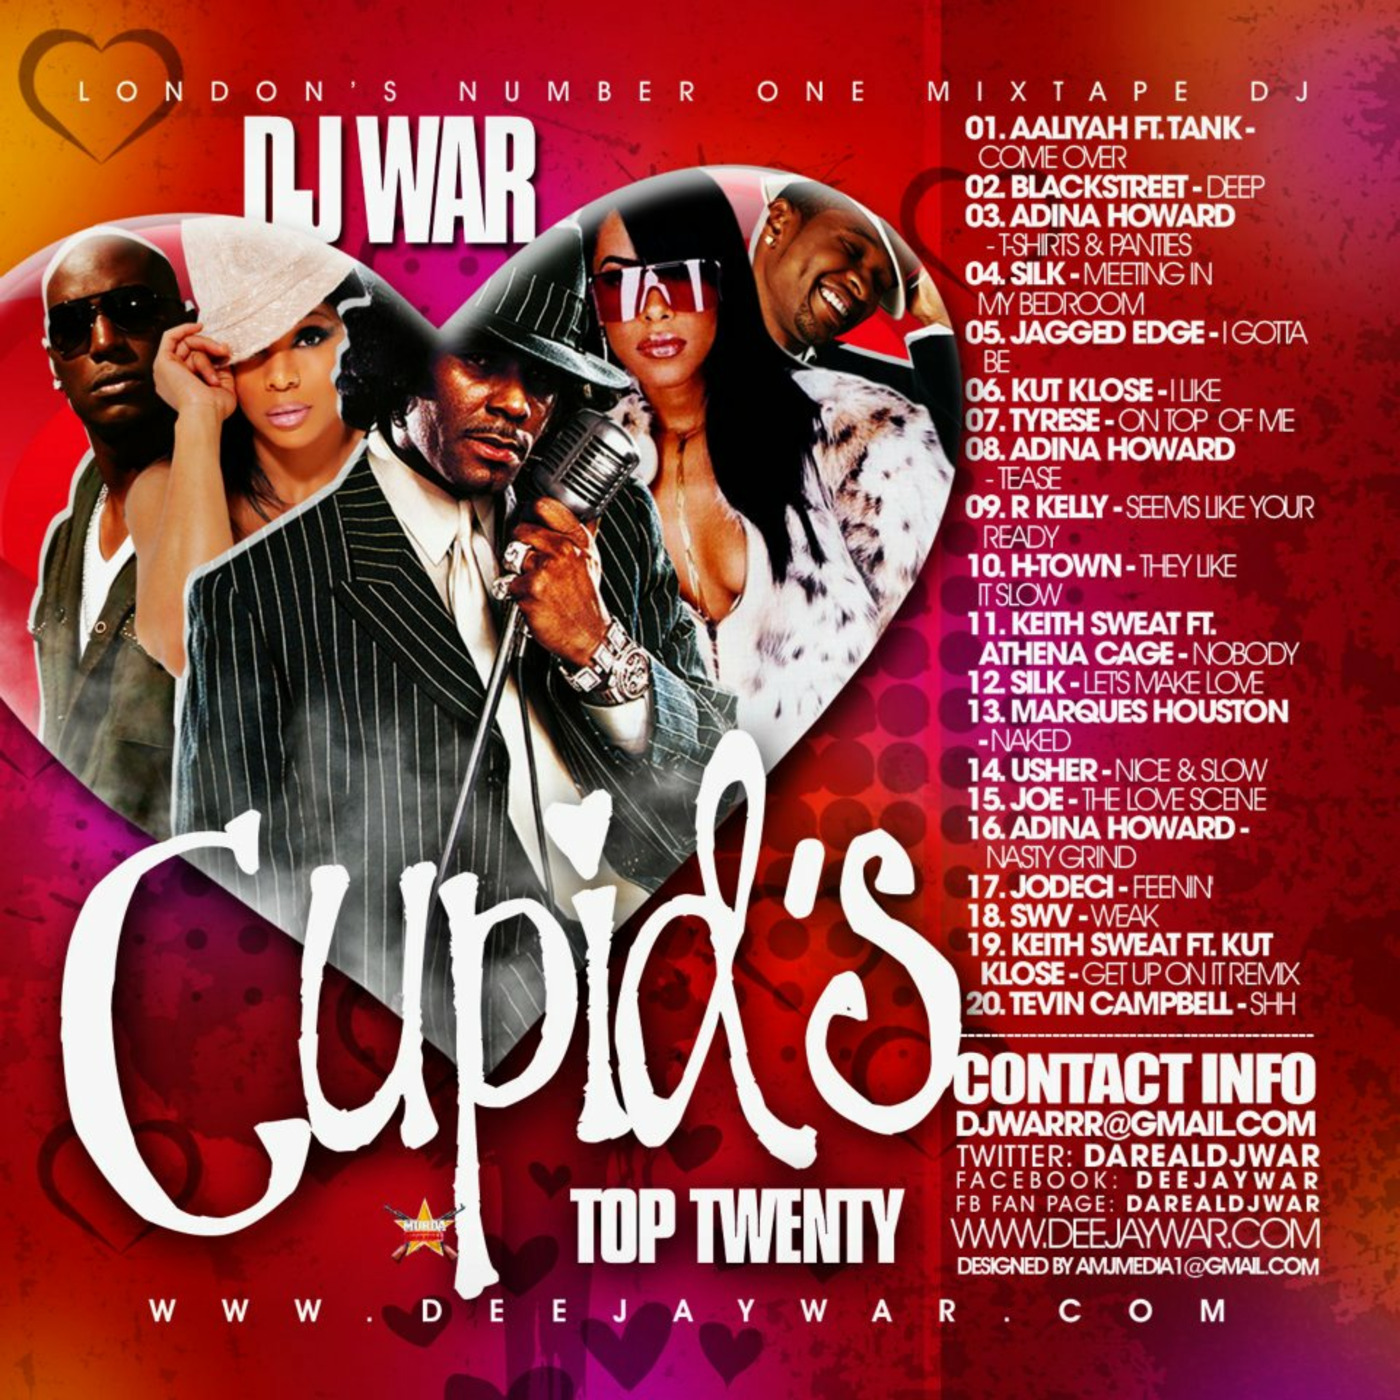 DJ War - Cupid’s Top Twenty #1 Valentines Mix, Slowjams